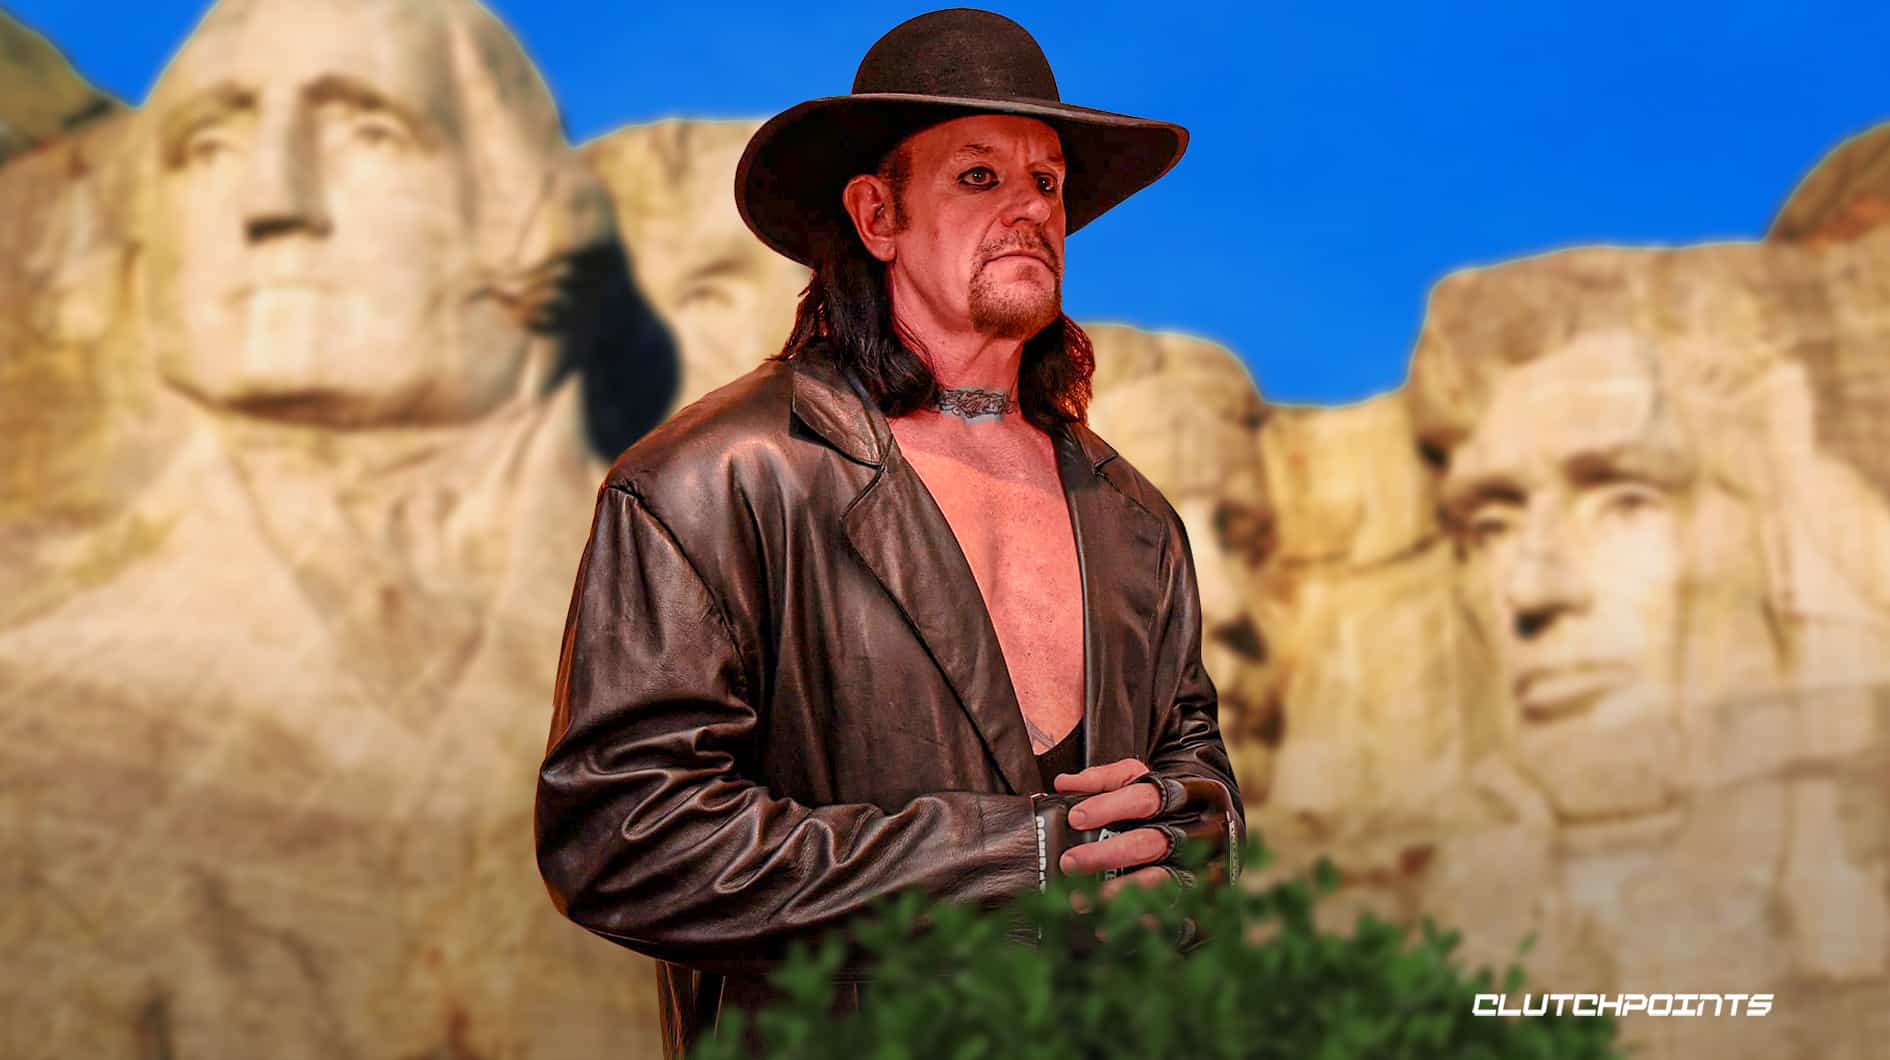 The Undertaker, "Stone Cold" Steve Austin, Andre The Giant, Ric Flair, Hulk Hogan, WWE